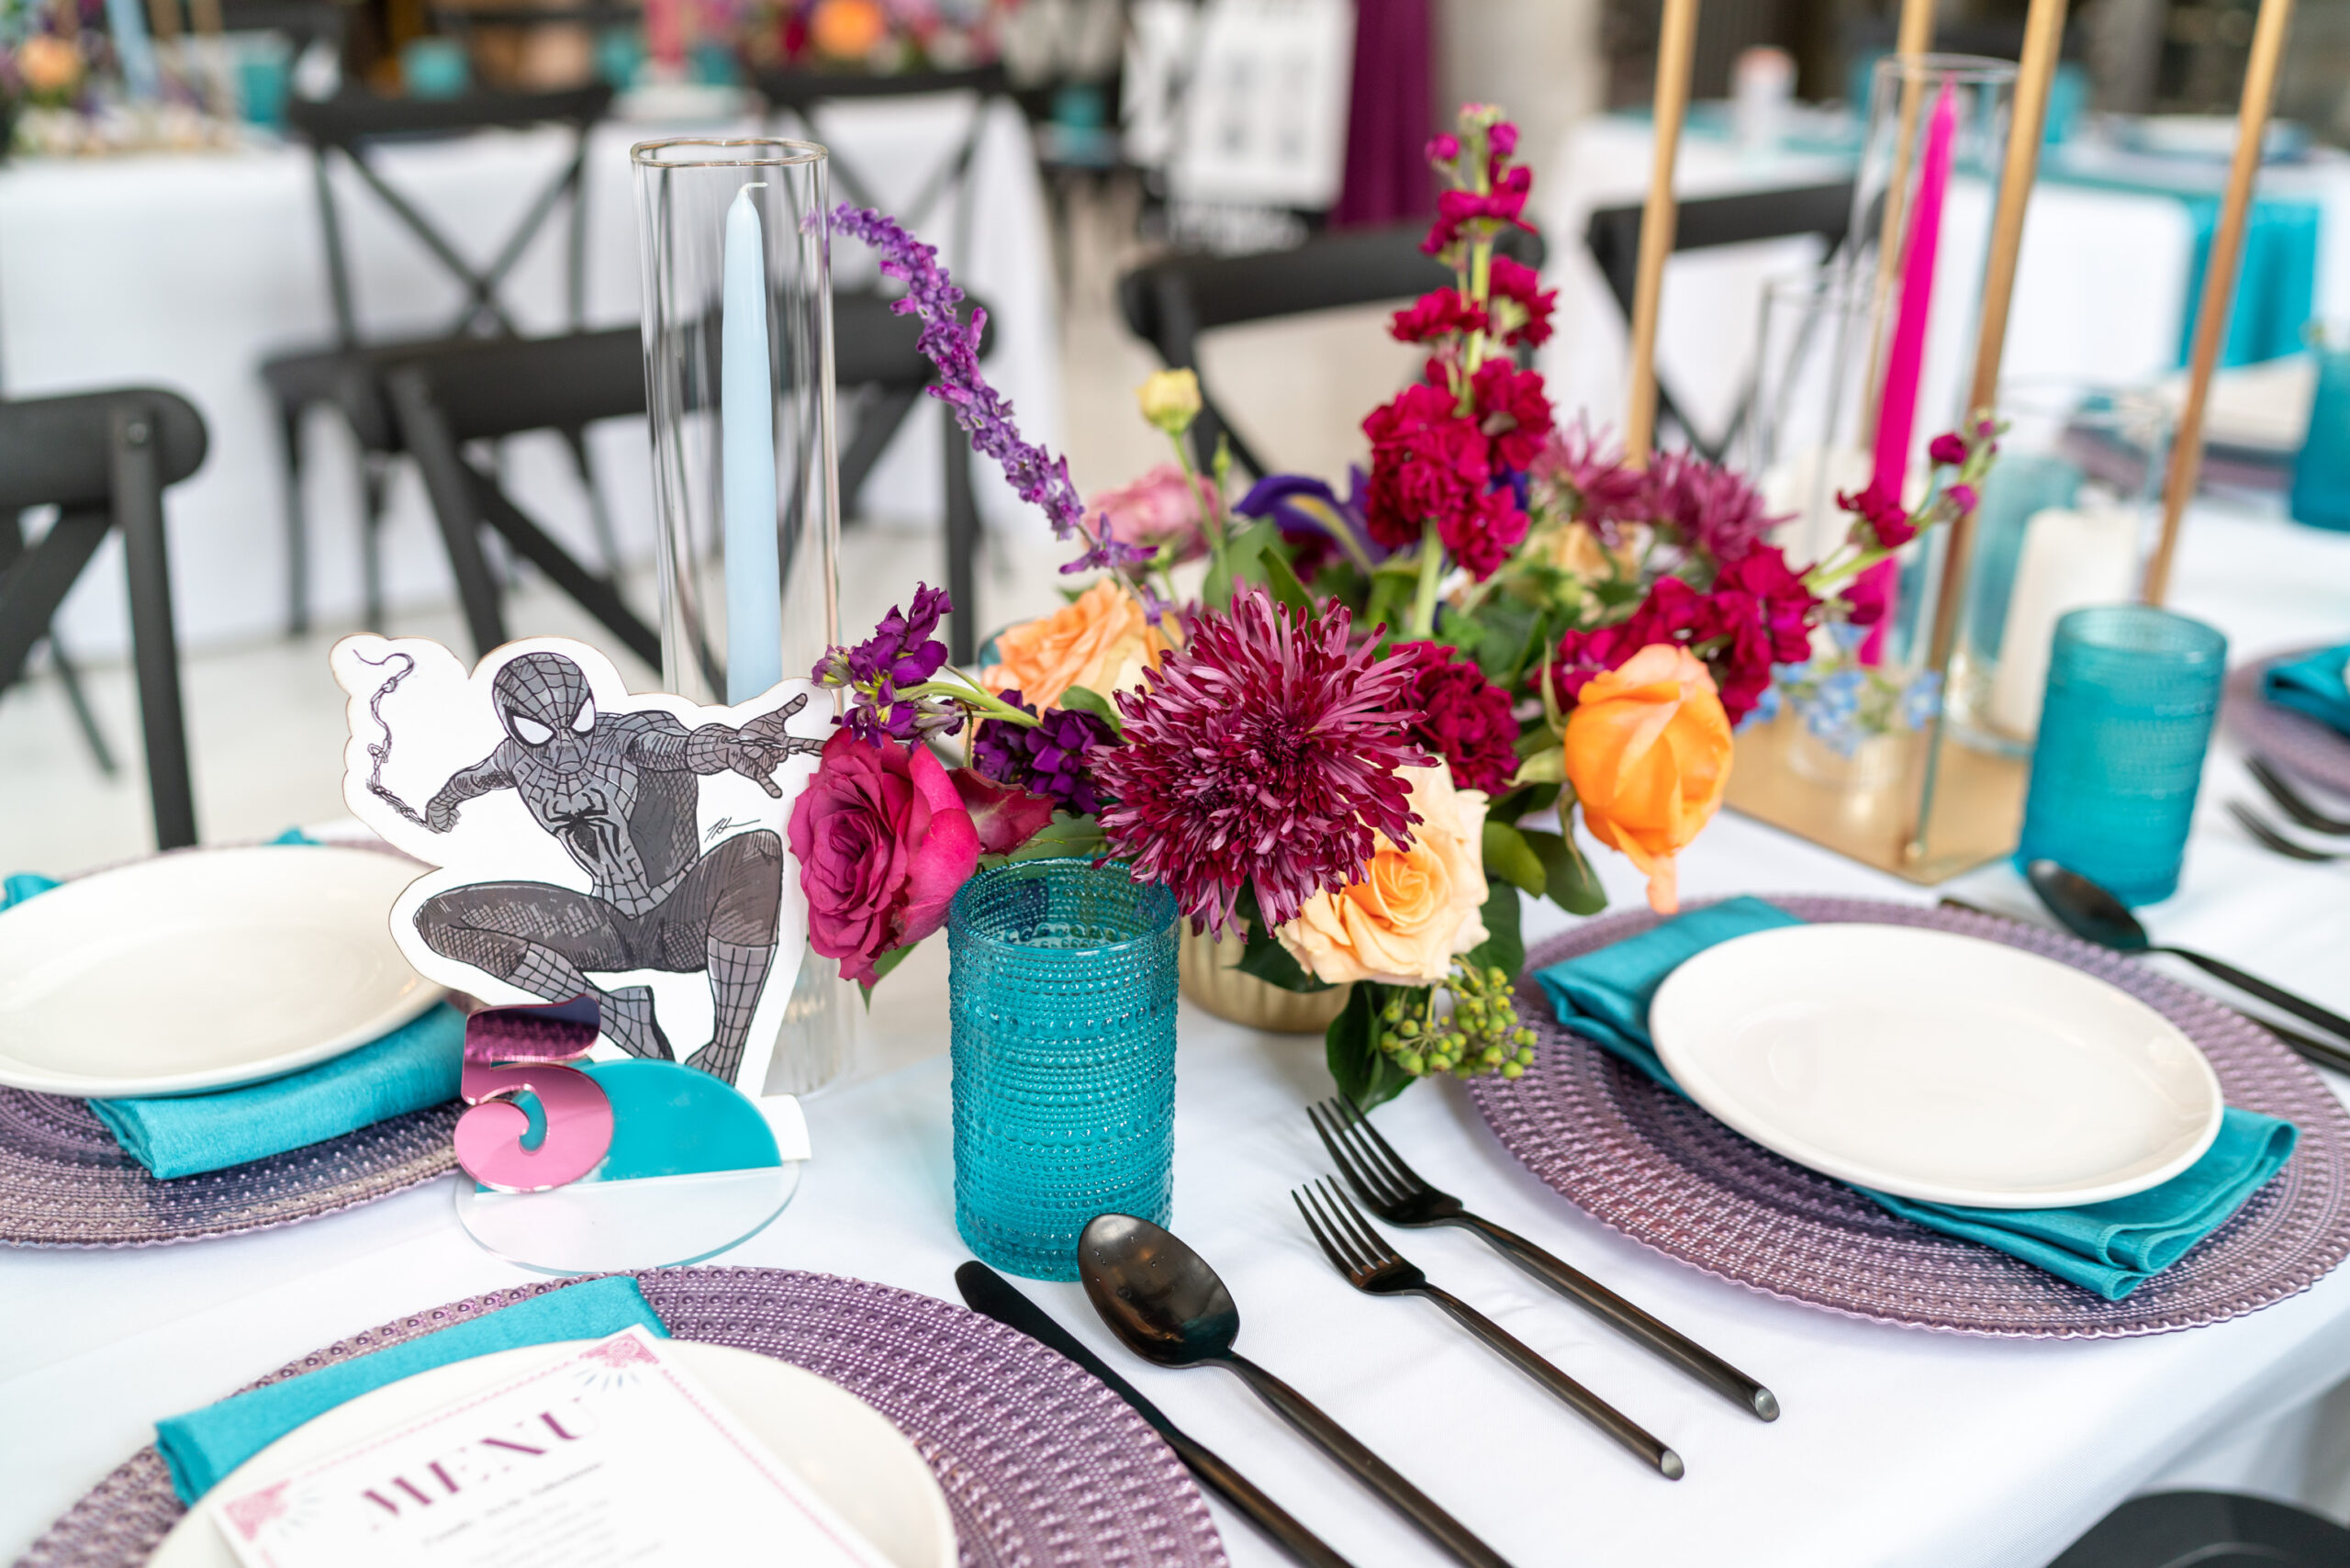 Modern Matte Black Flatware for Weddings & Events - GREYSTONE TABLE